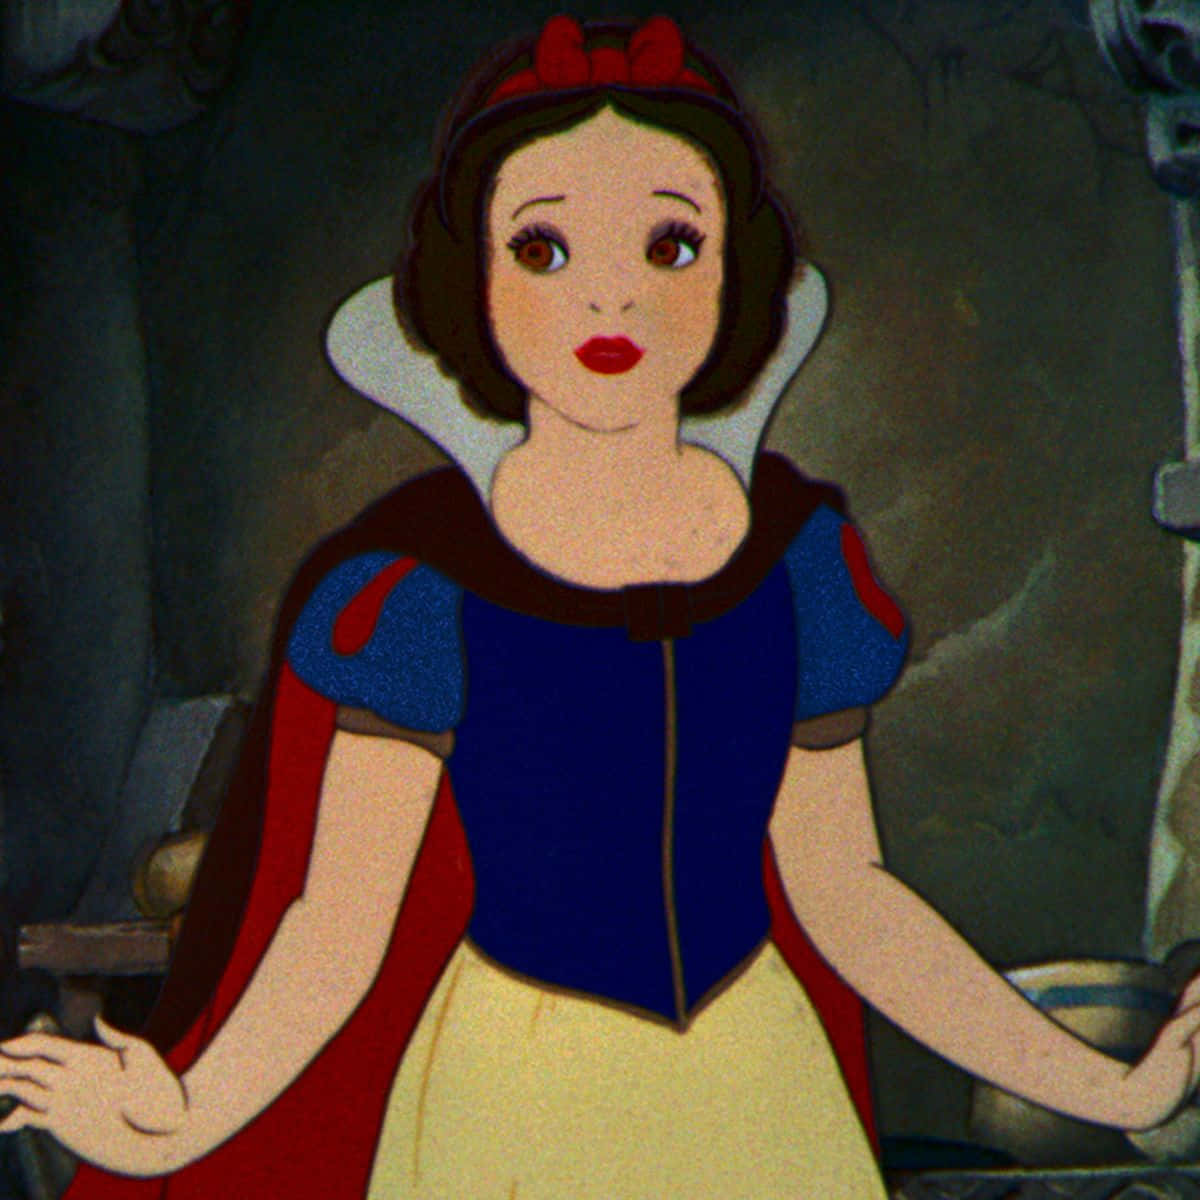 Snow White walks among a wondrous winter forest